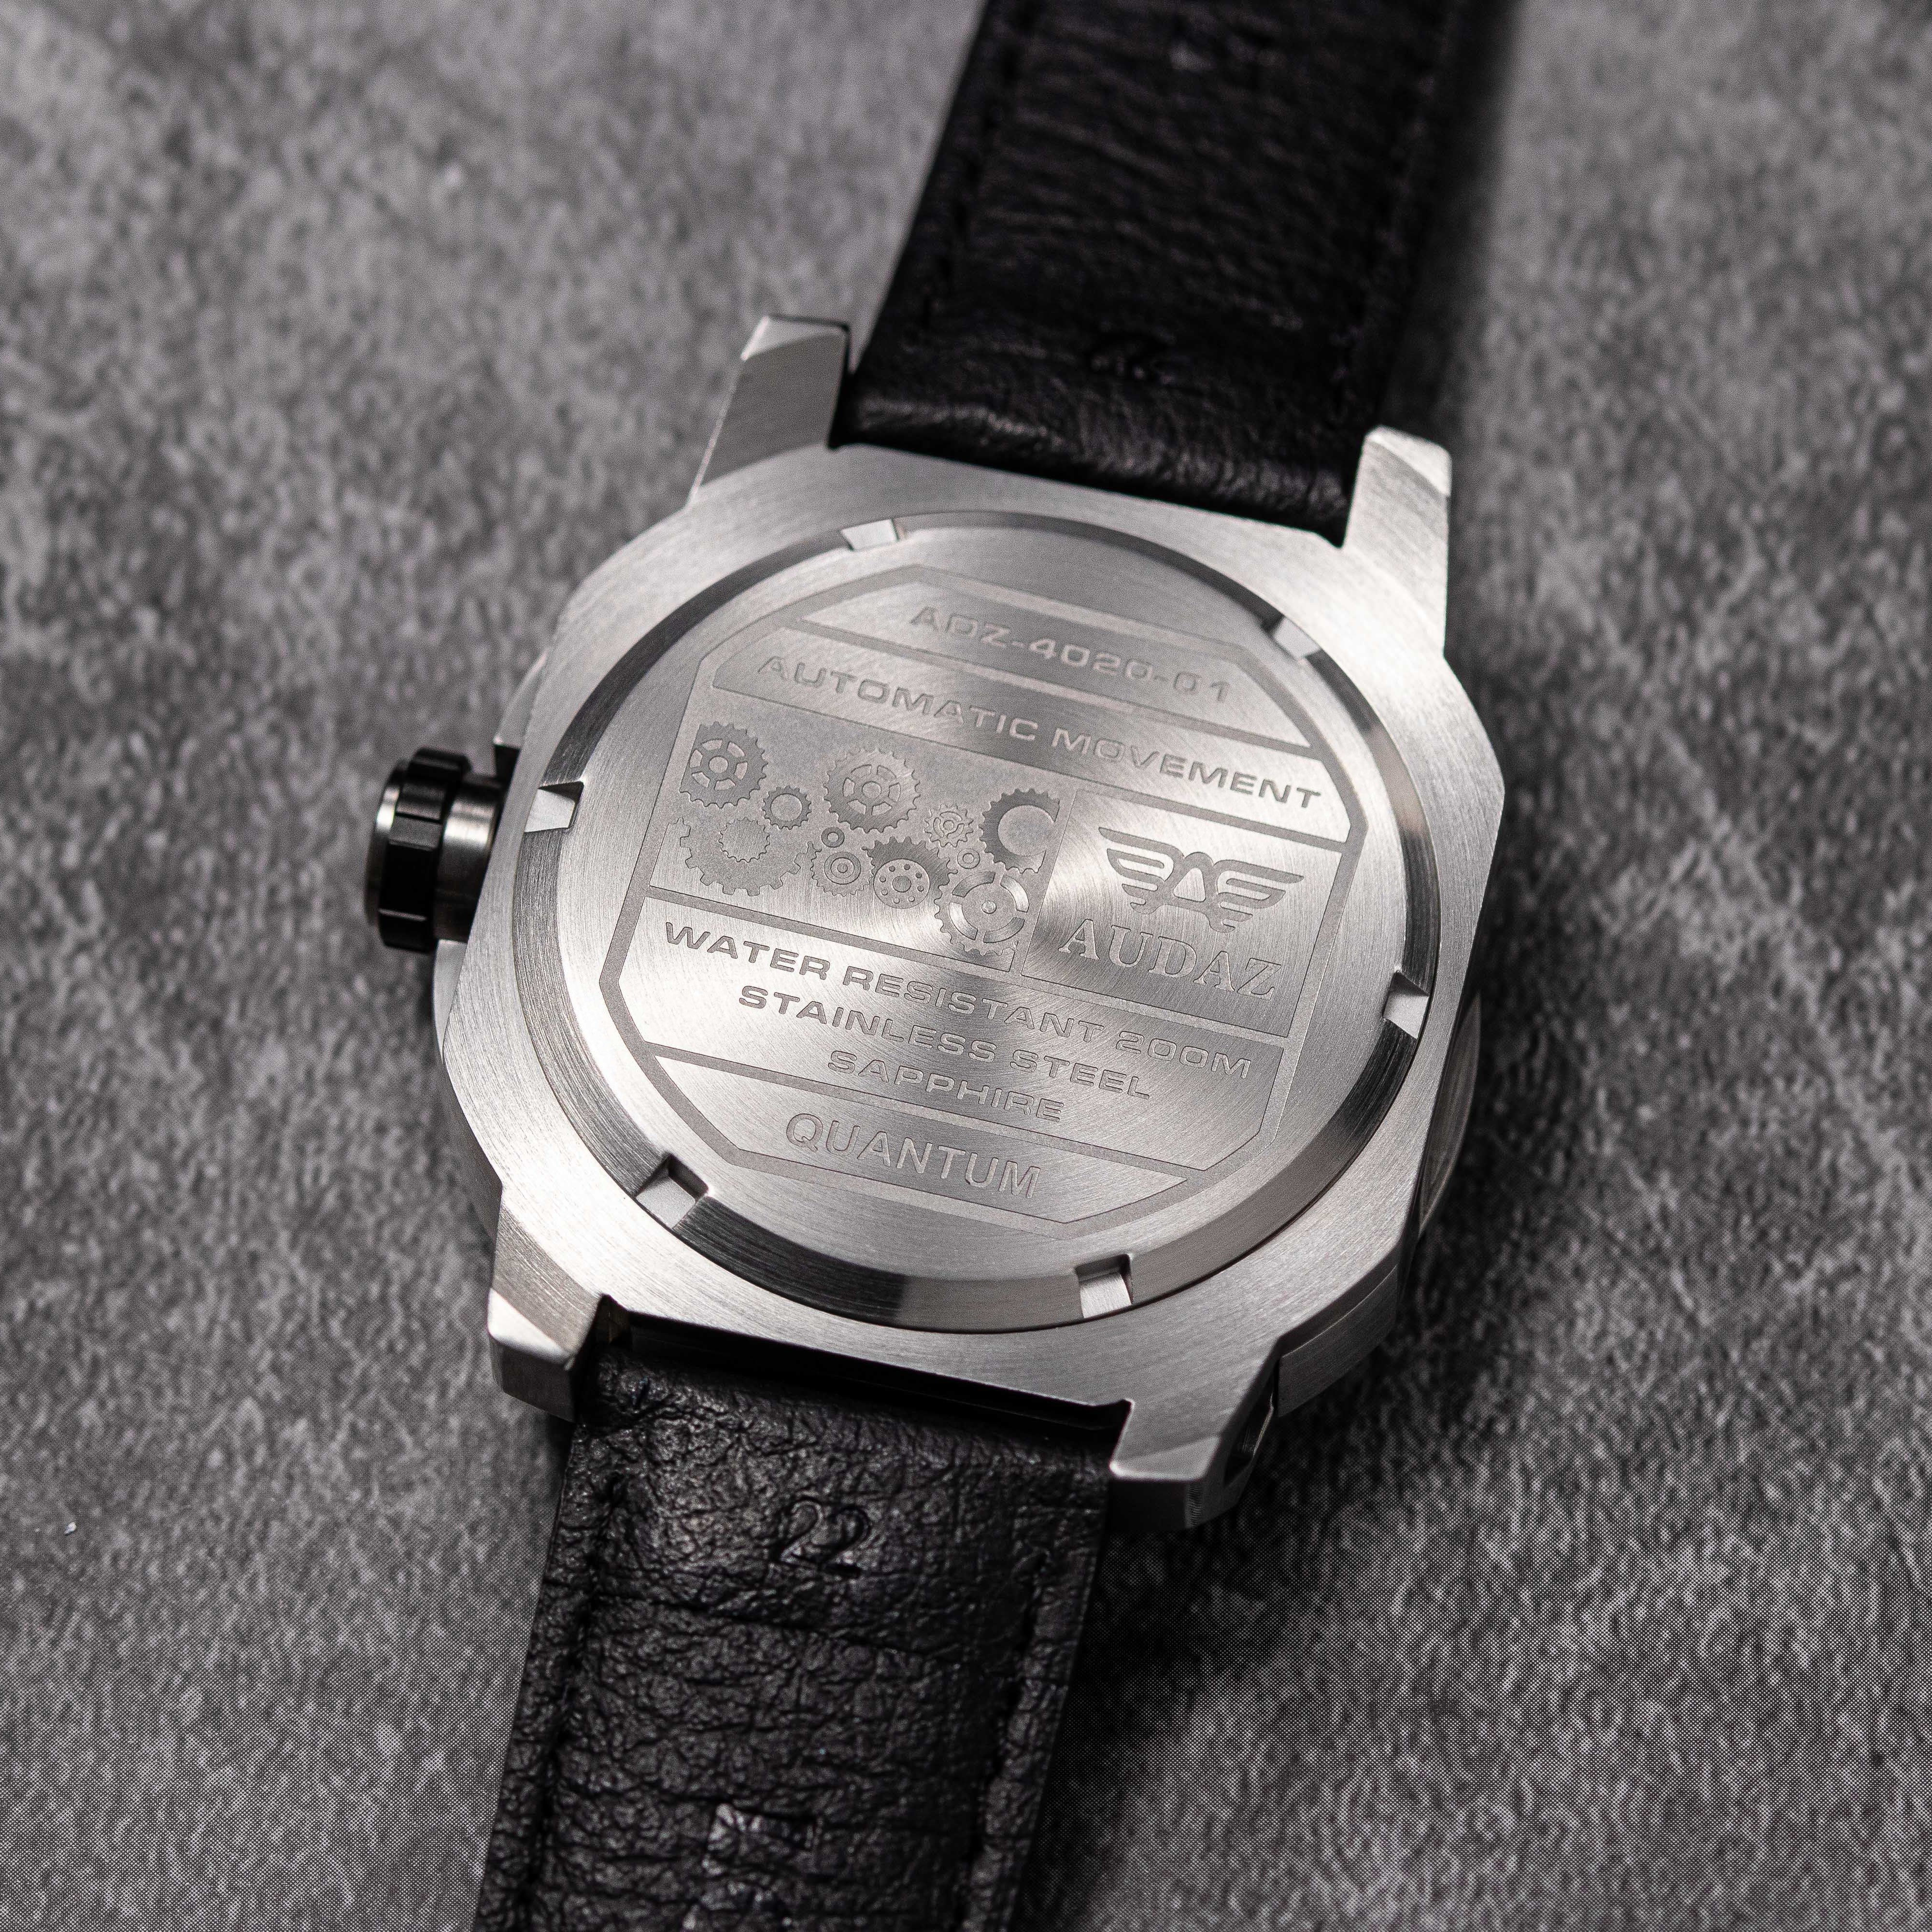 Watches Audaz Movement Collection - Quantum Automatic Skeletonized Audaz I